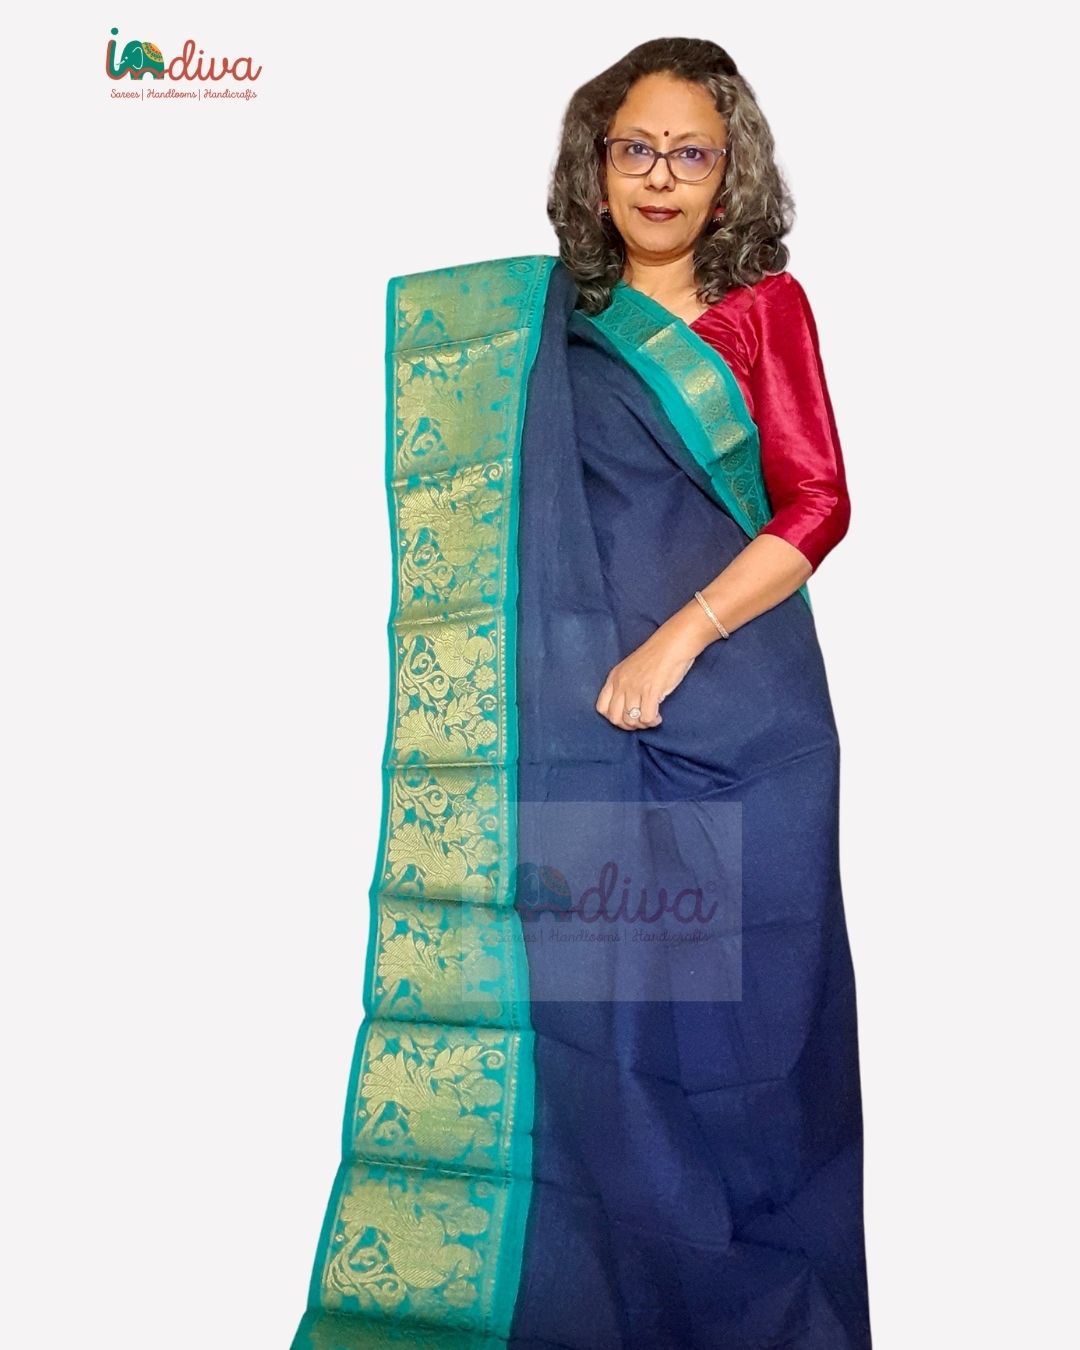 Blue & Green Tie Dye Sungudi Handloom Cotton Saree